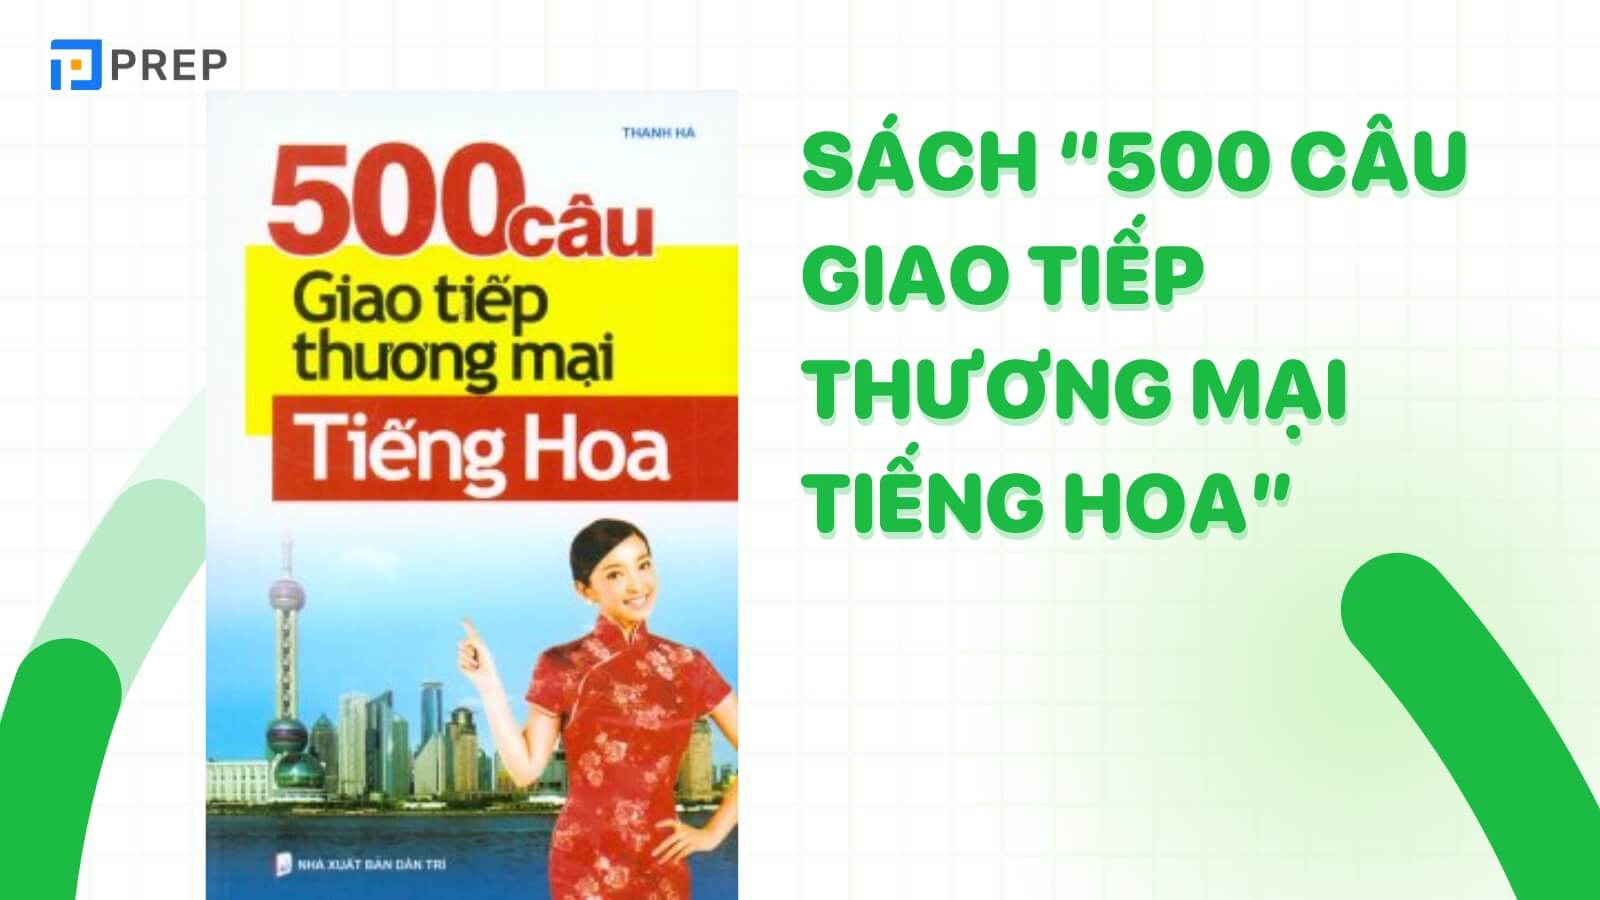 sach-“500-cau-giao-tiep-thuong-mai-tieng-hoa”.jpg